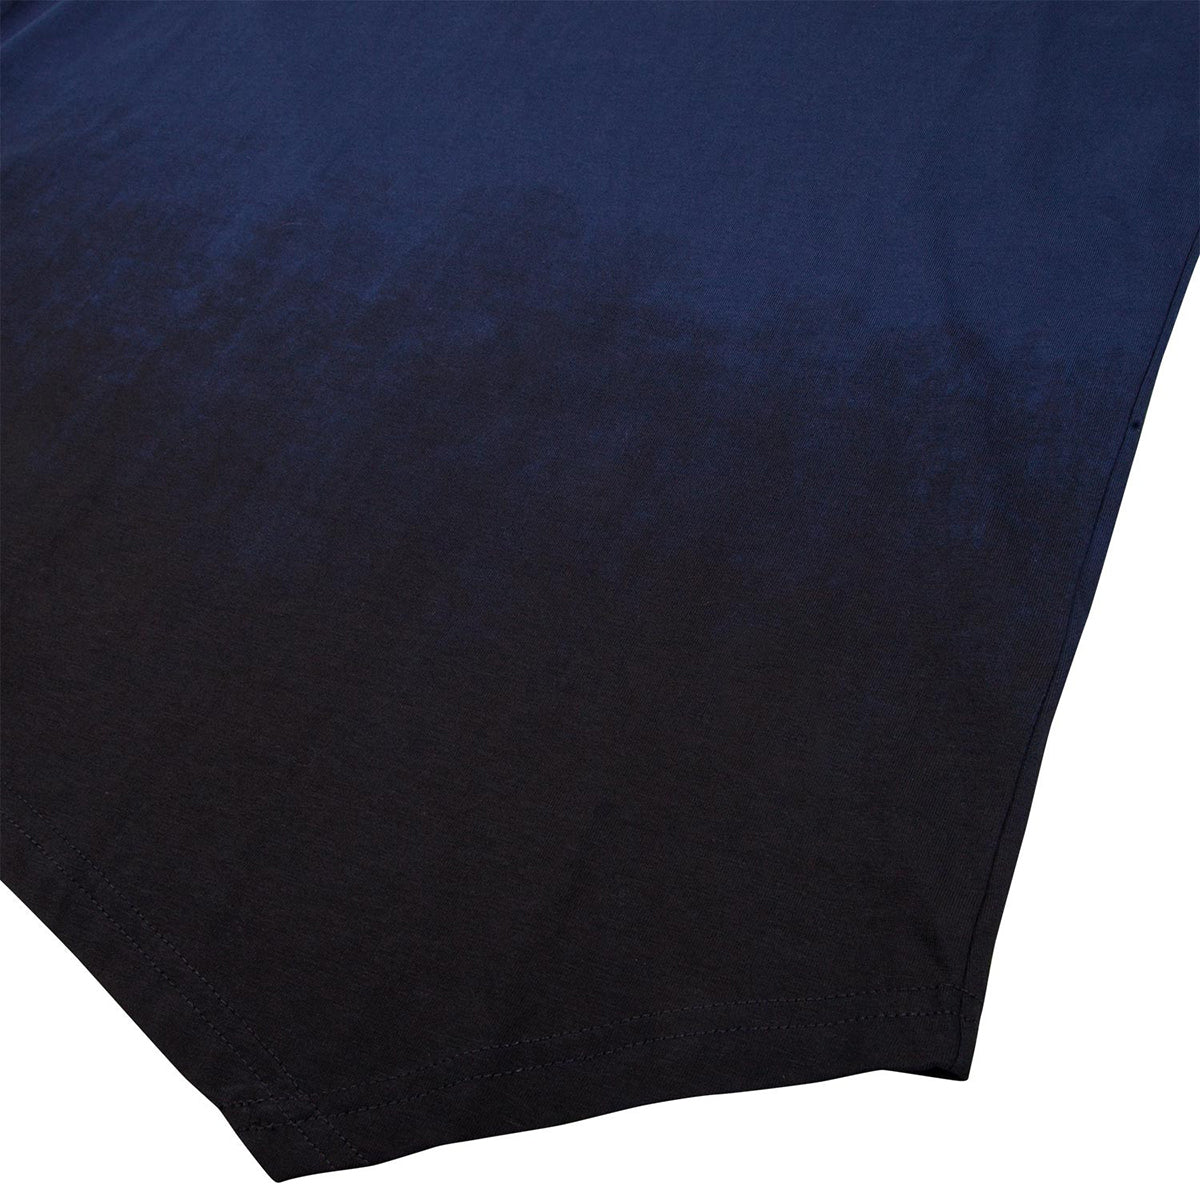 Venum Interference 2.0 Short Sleeve T-Shirt - Navy Blue Venum